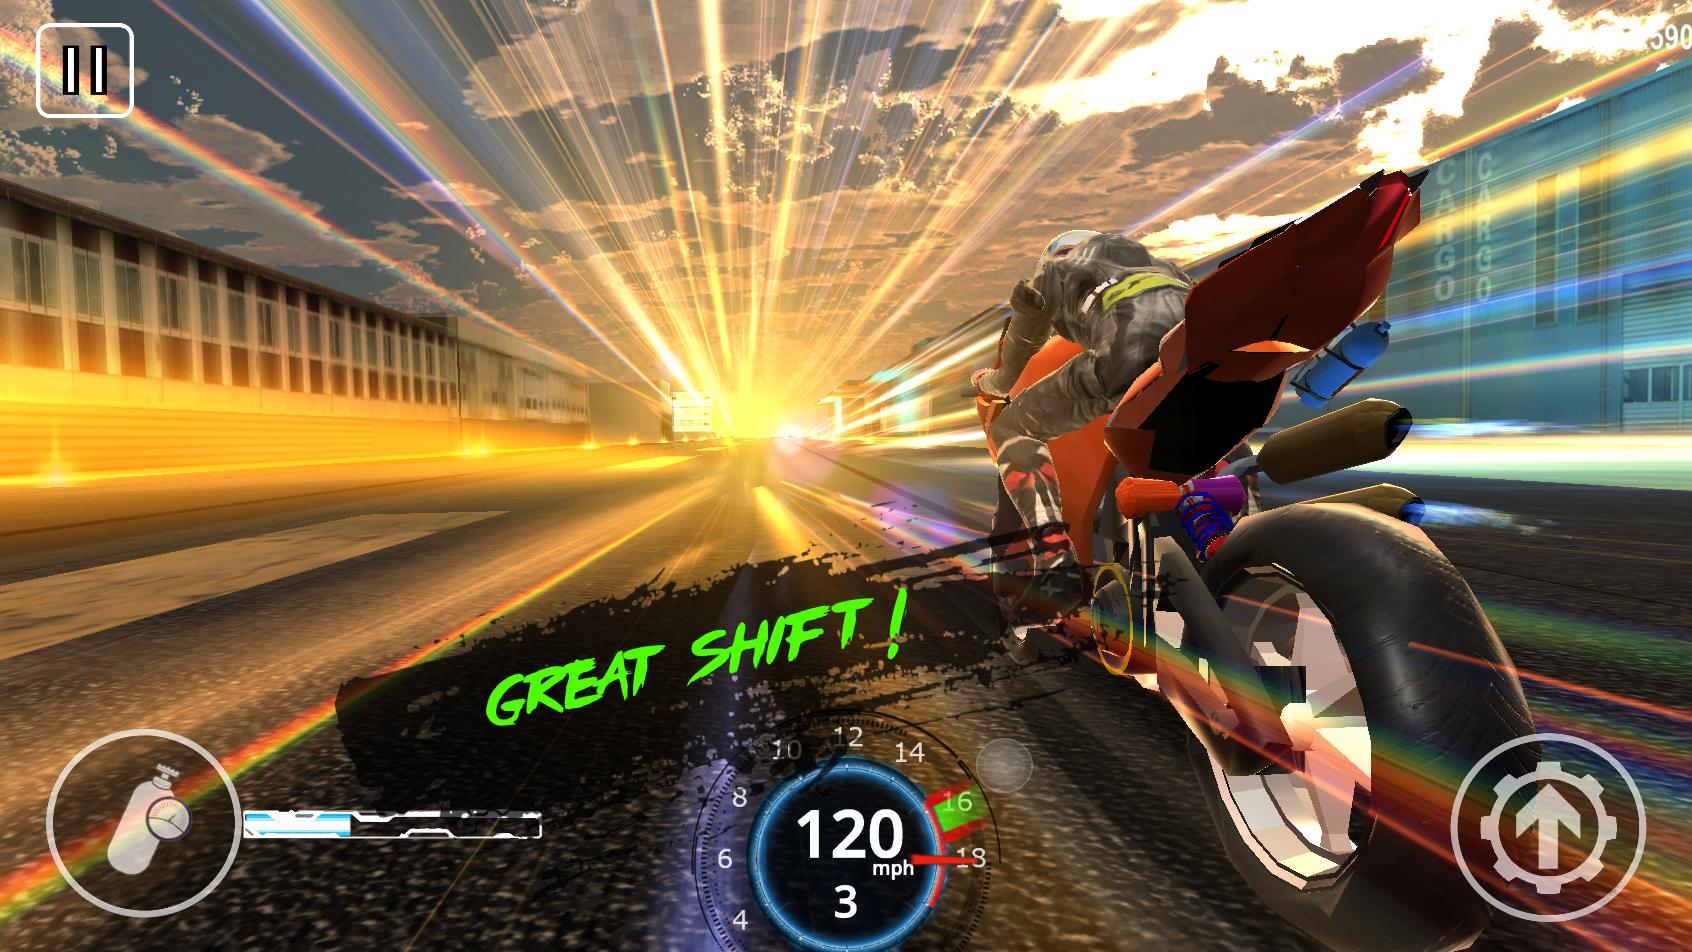 Rebel Gears Drag Bike Racing / CSR Race Moto Game 1.3.2 Screenshot 1